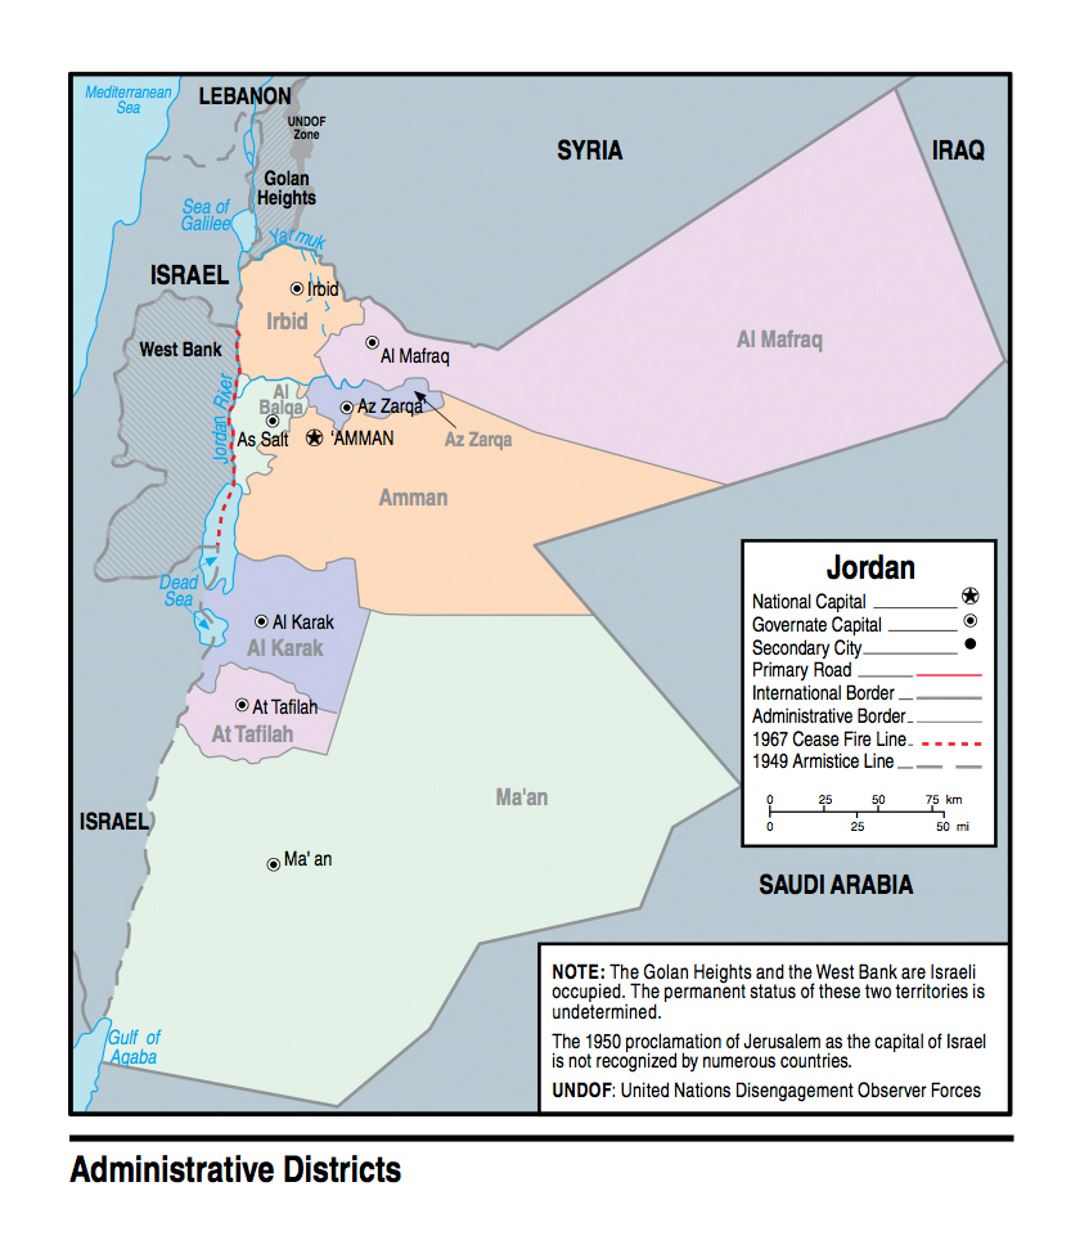 Detallado mapa de administrativos distritos de Jordania - 2009